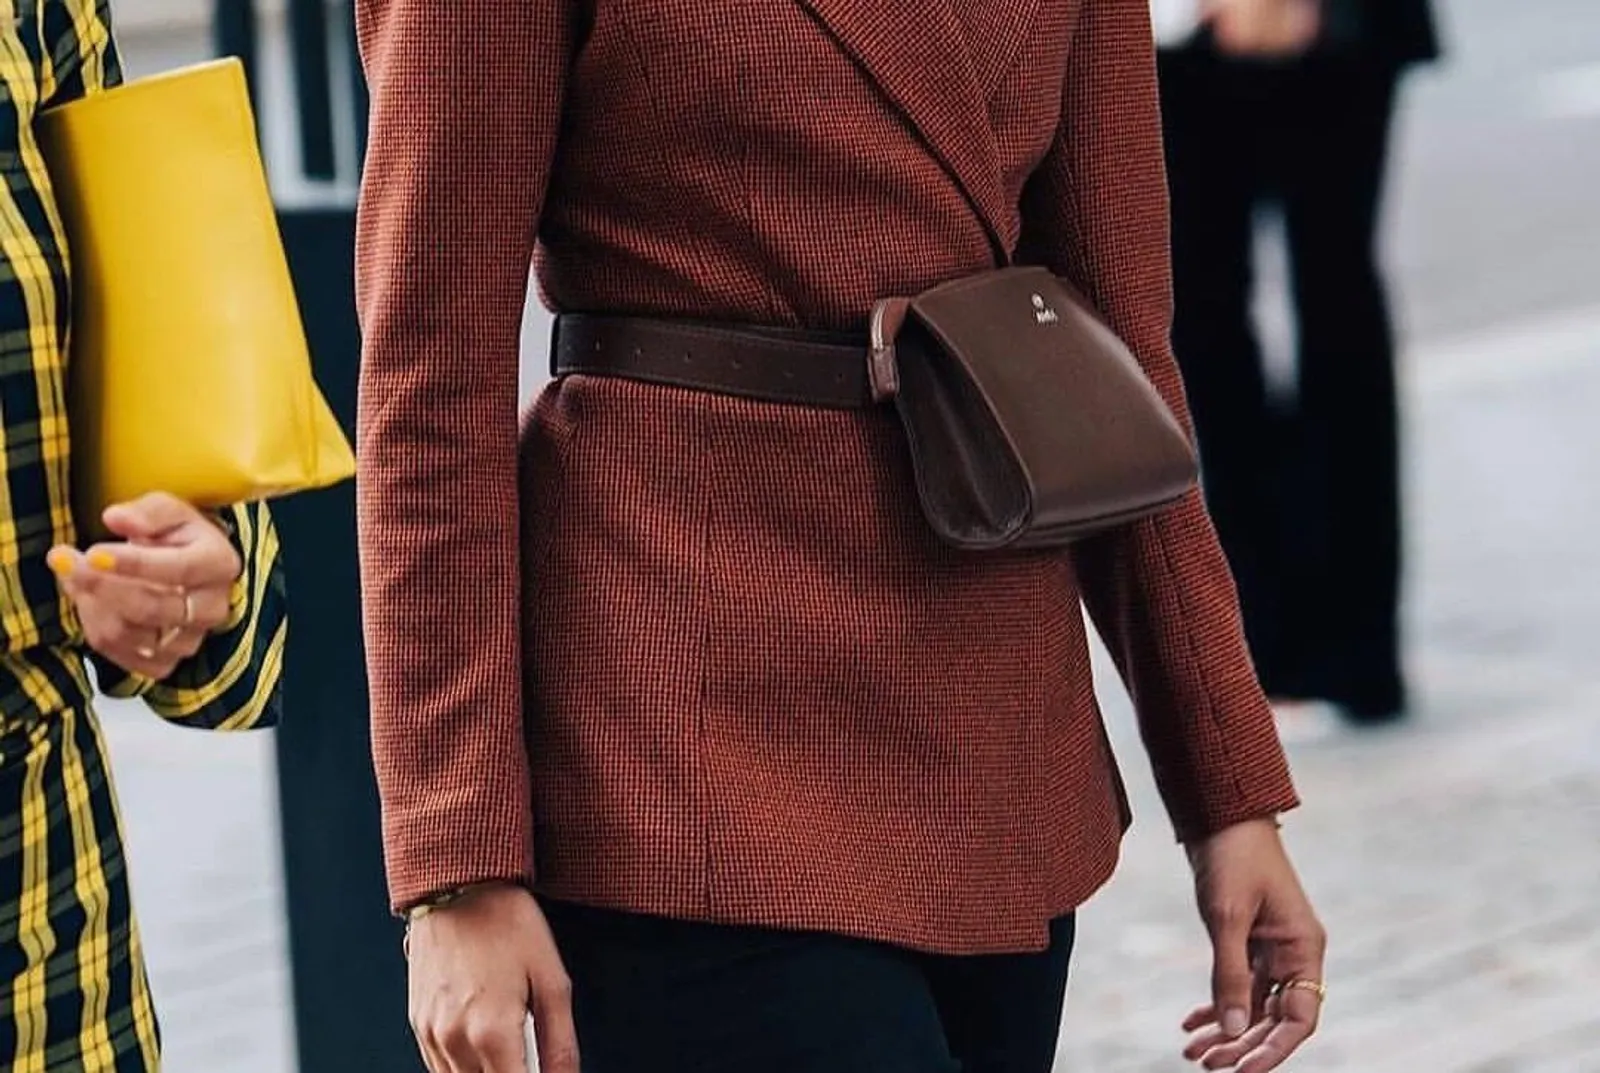 Jenis-jenis Tas Mini yang Lagi Trend di Kalangan Fashionista